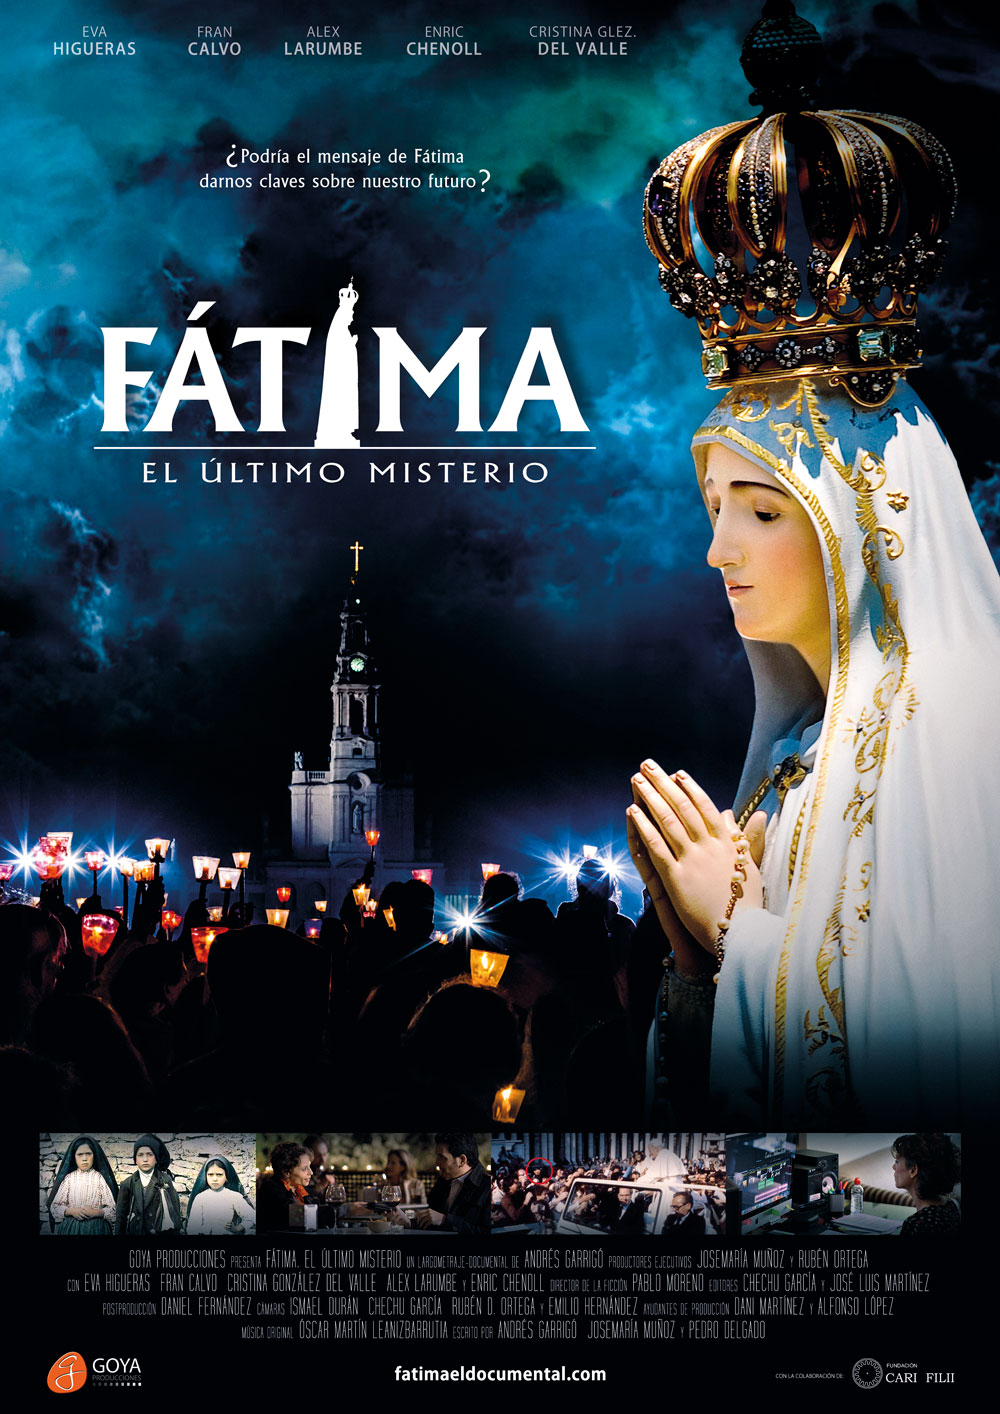 Fatima: the ultimate mistery